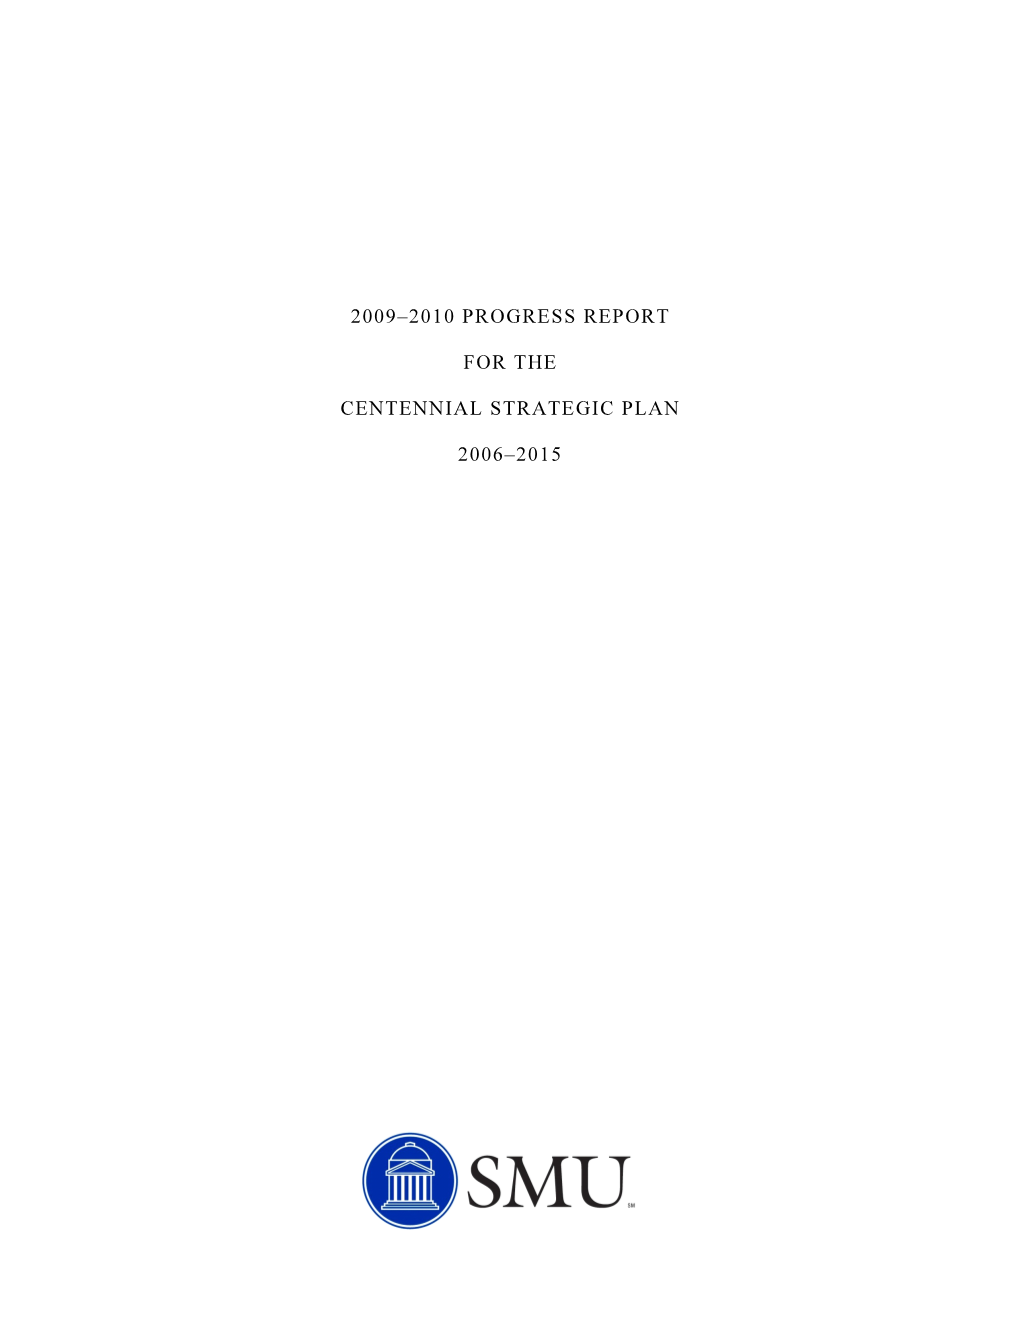 2009–2010 Progress Report for the Centennial Strategic Plan 2006–2015